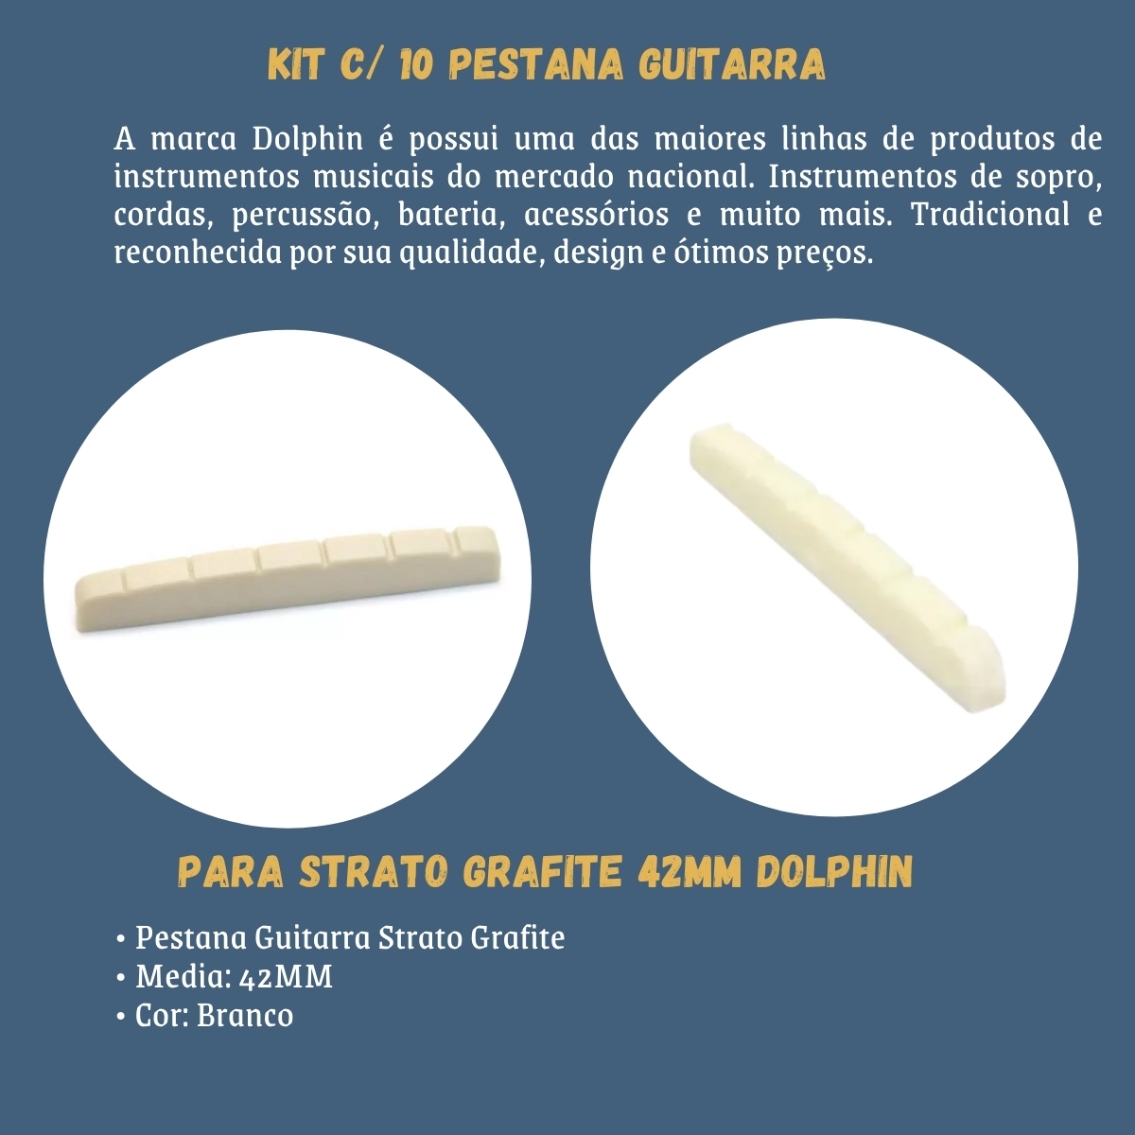 Kit c/ 10 Pestana guitarra strato grafite 42mm dolphin 13538  - Grupo Solmaior